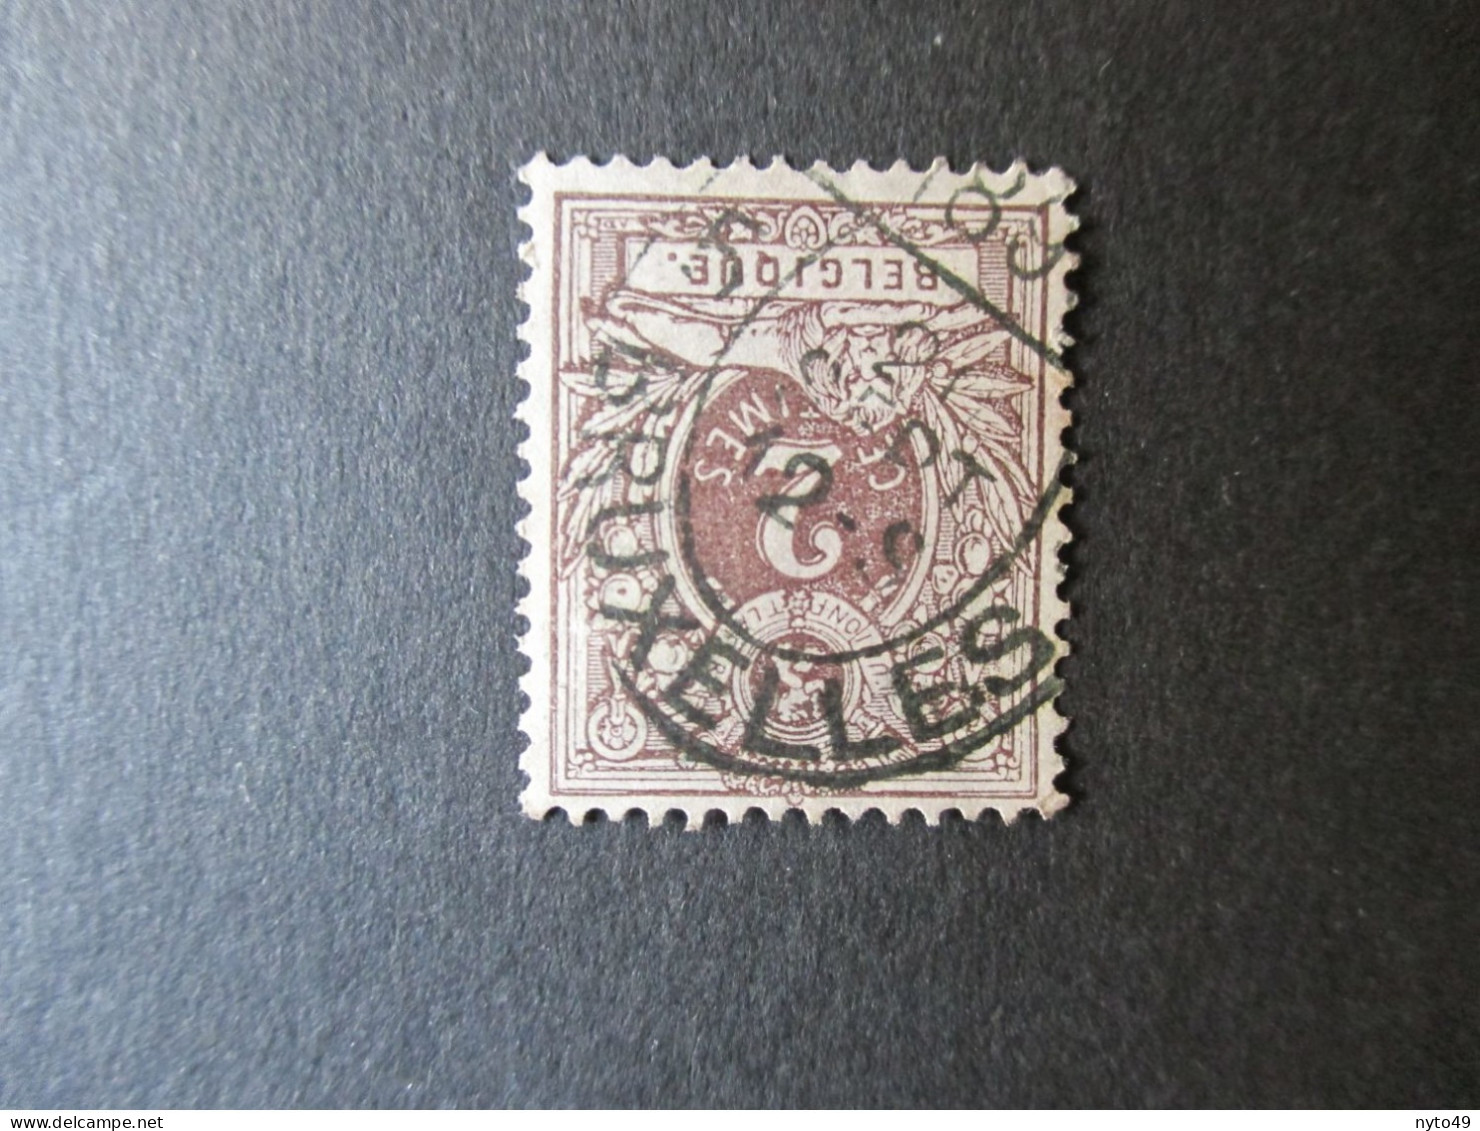 Nr 44 - Liggende Leeuw - Dagbladstempel - 1869-1888 Lion Couché